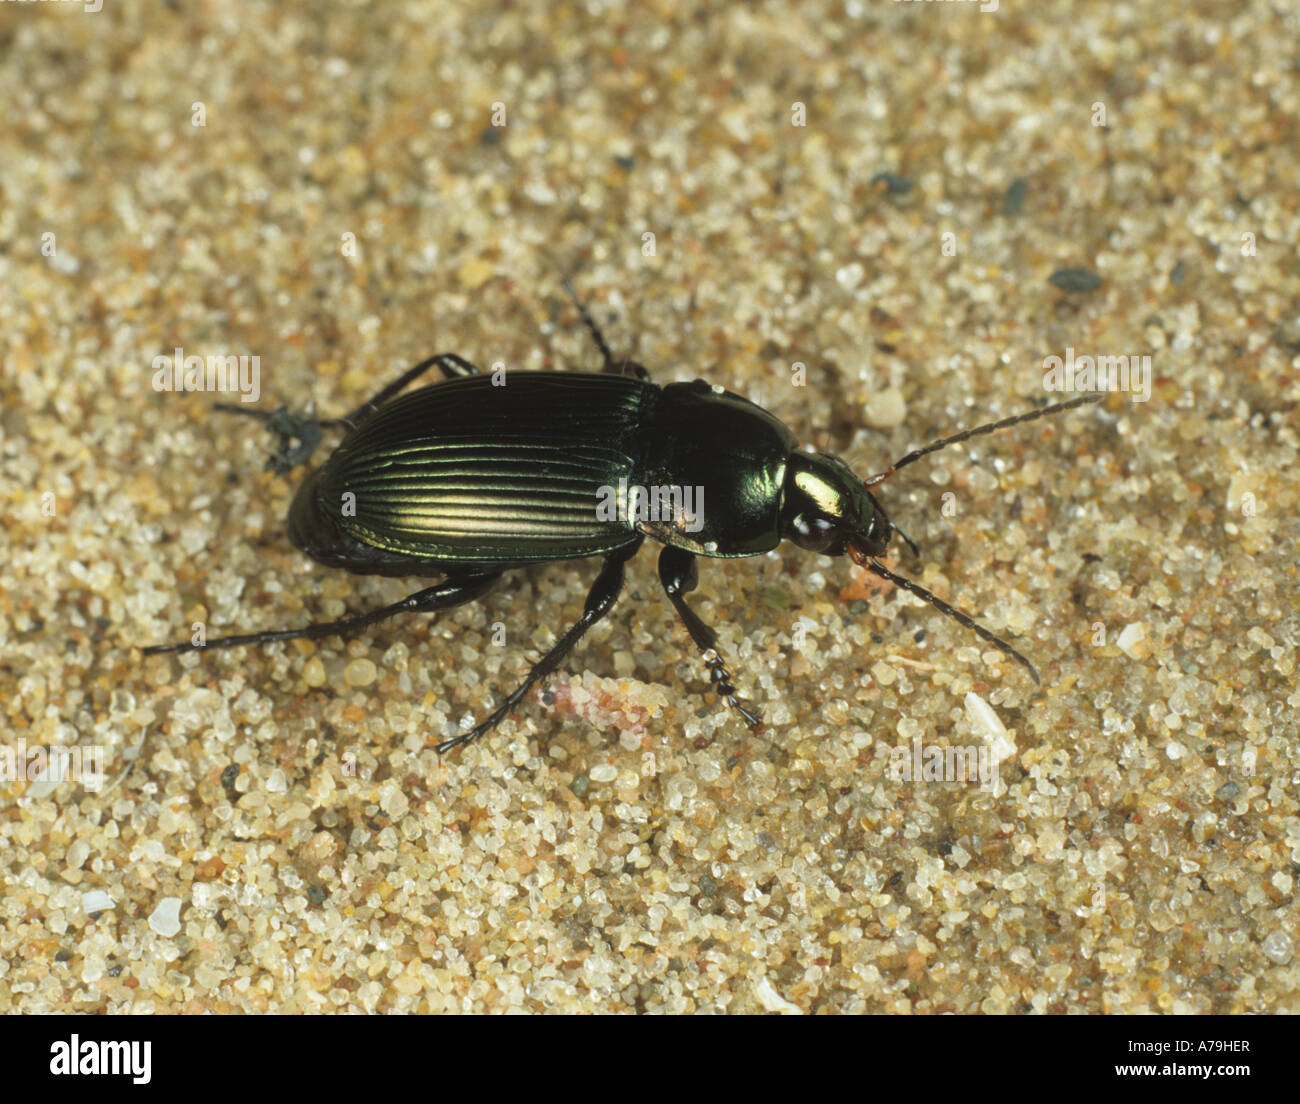 A ground beetle Harpalus affinis adult predatory beetle, apredator of small invertebrates on sand Stock Photo